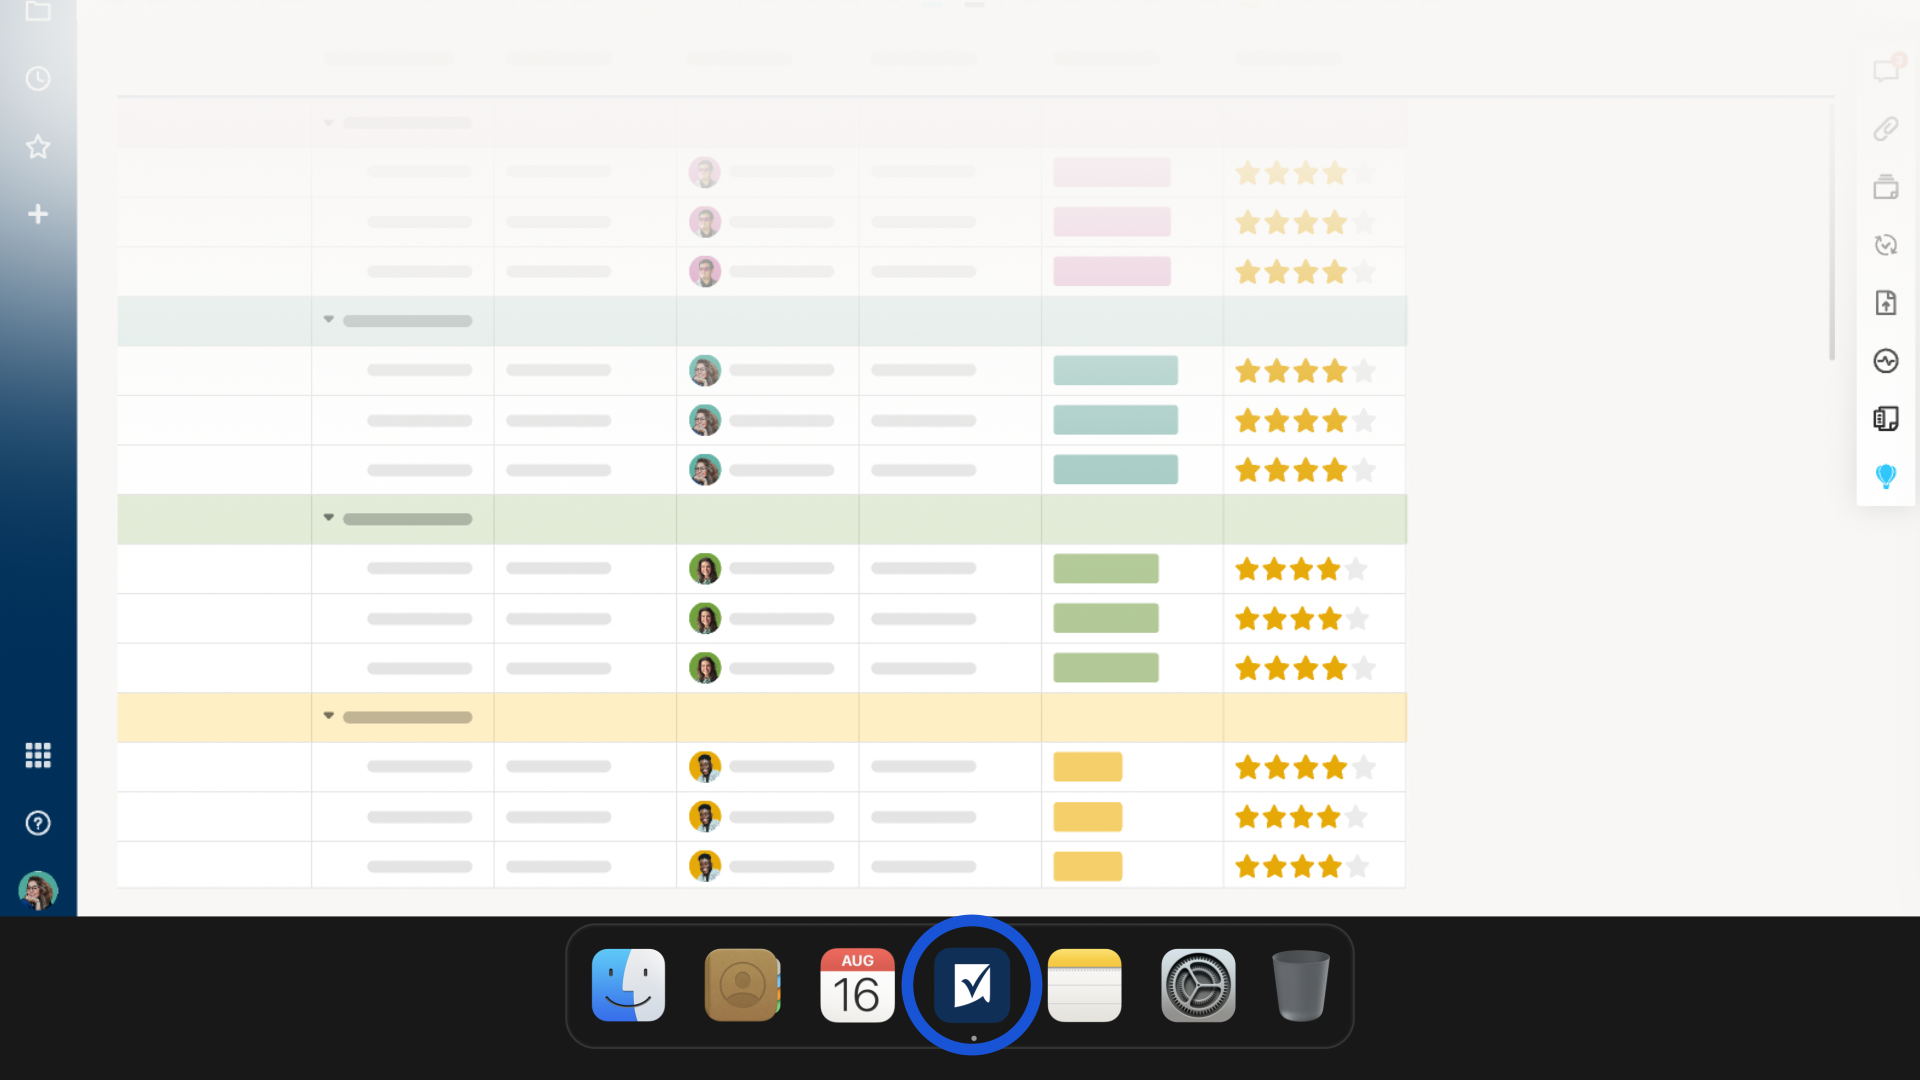 Pin the Smartsheet Desktop App to your taskbar